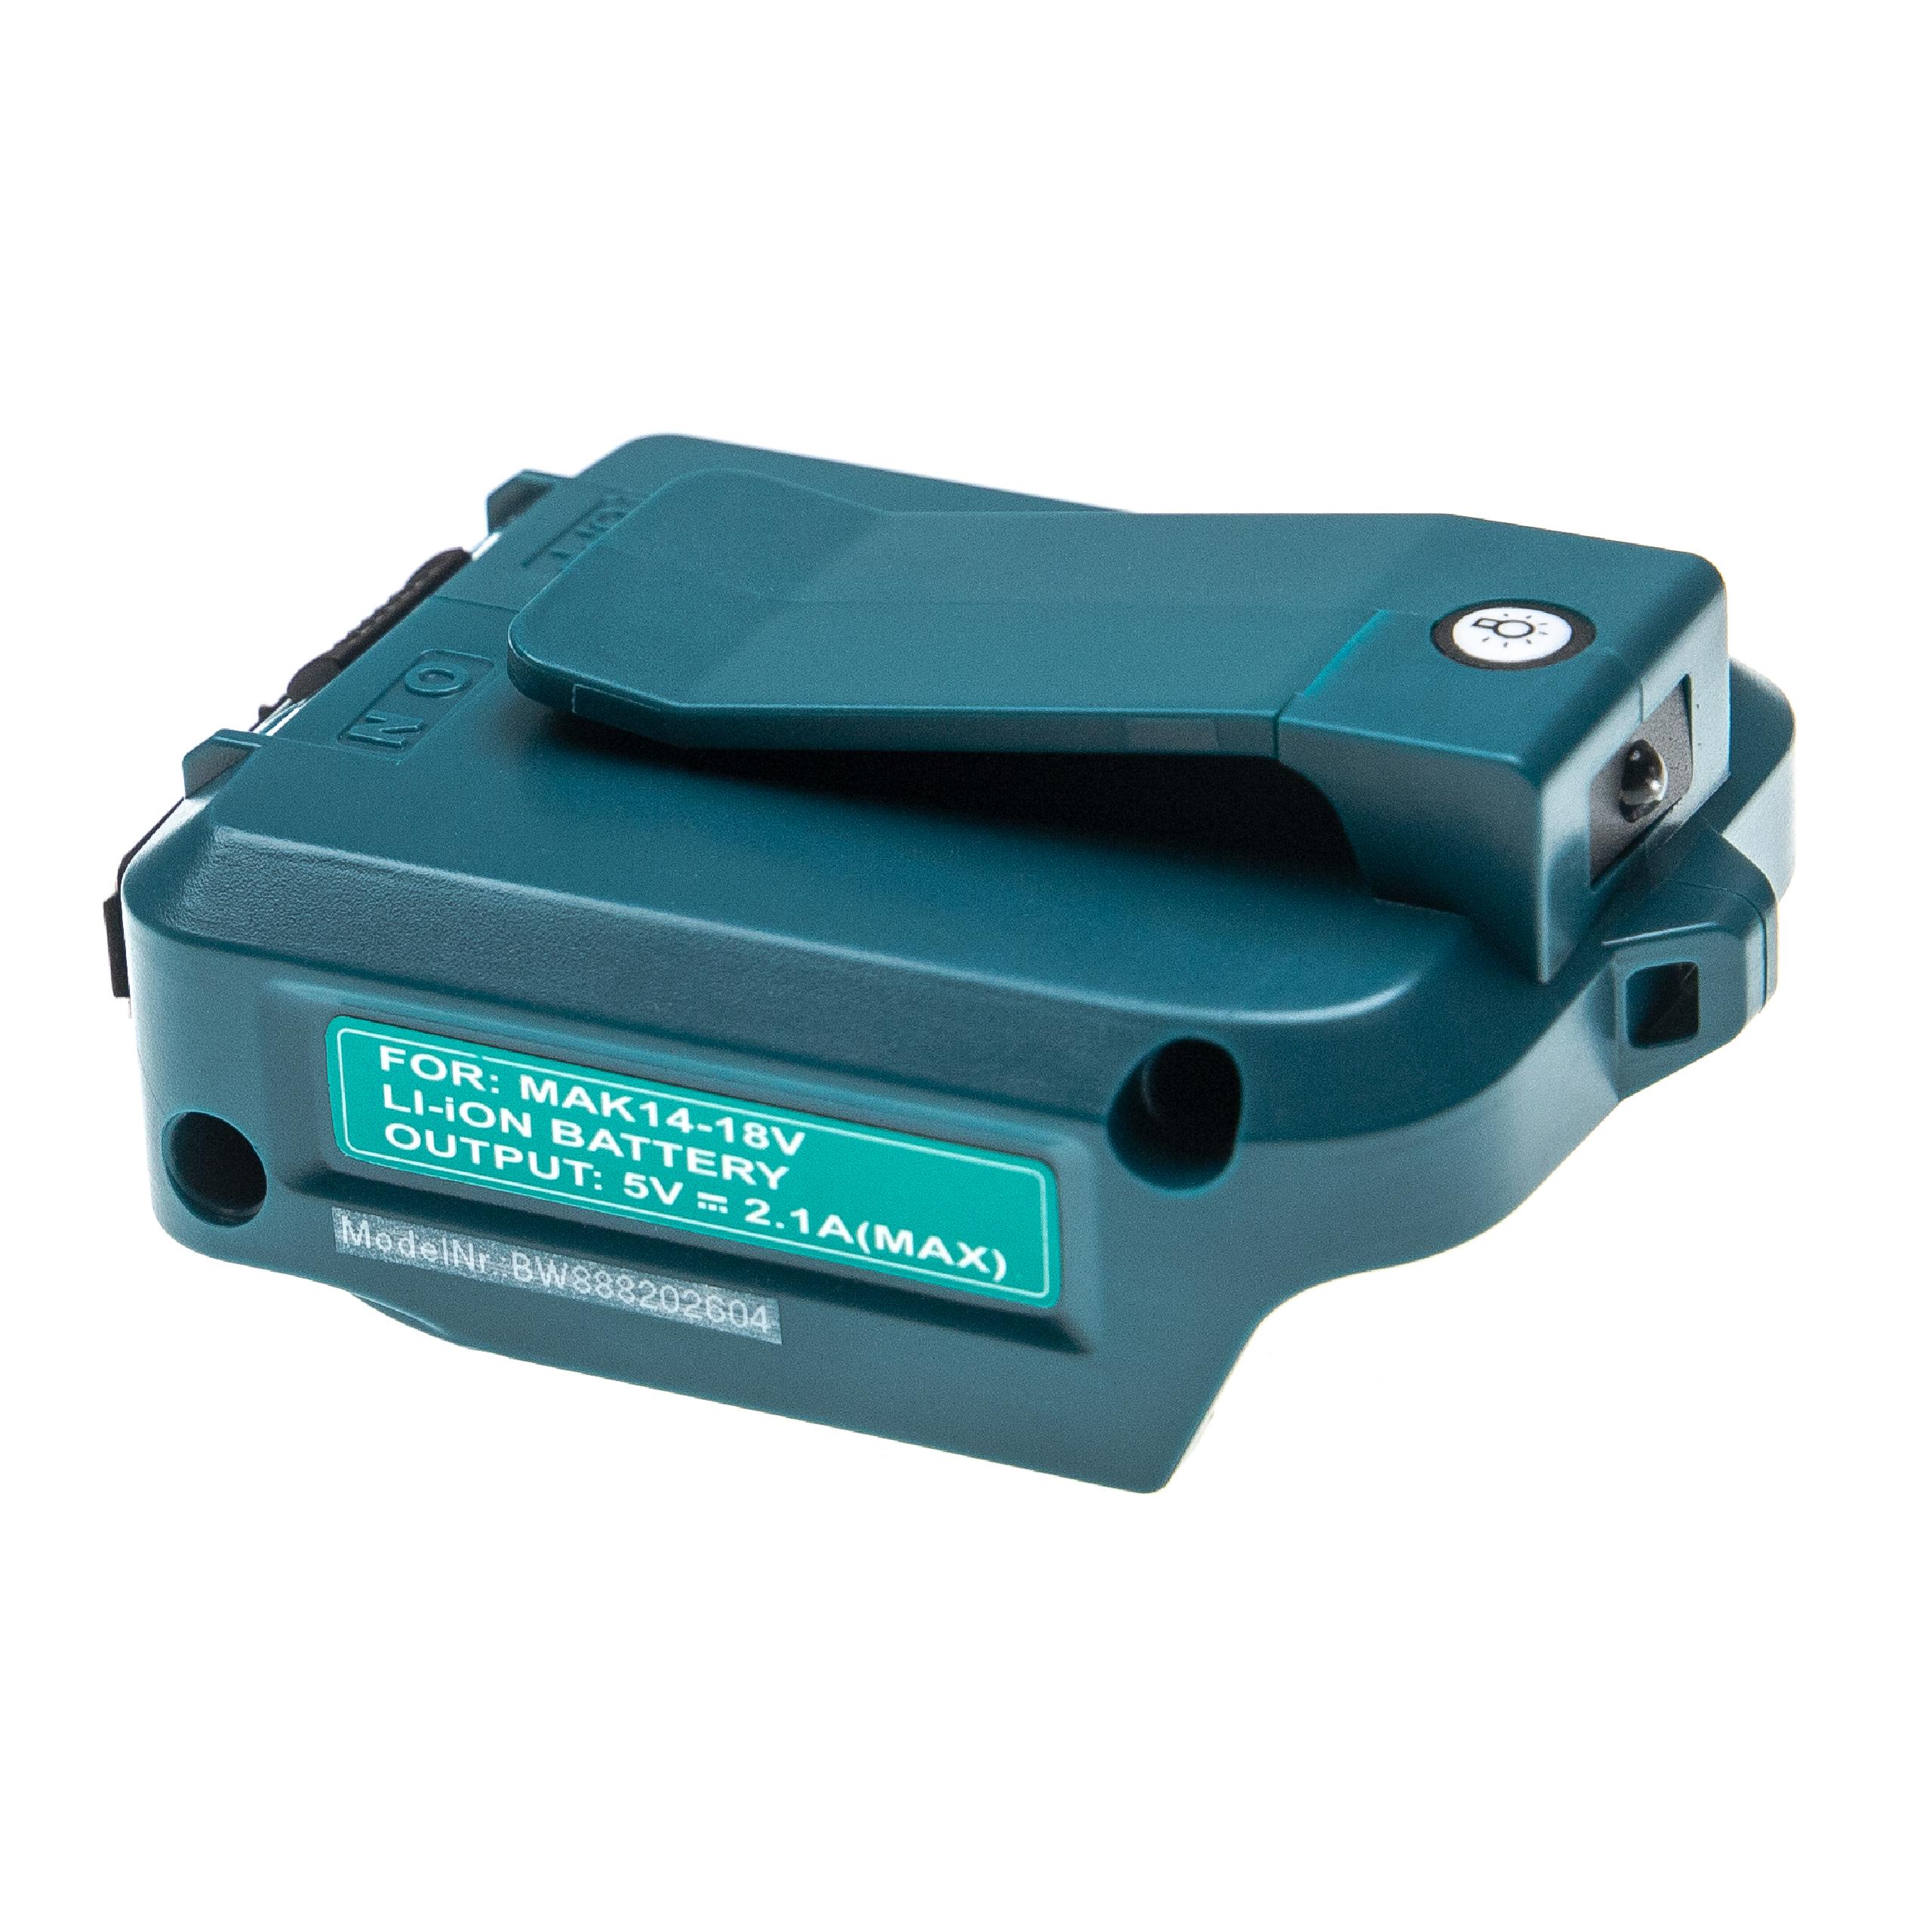 Battery Adapter replaces Makita ADP05 for Makita Tool - 14.4 V - 18 V / 2 A Li-Ion 